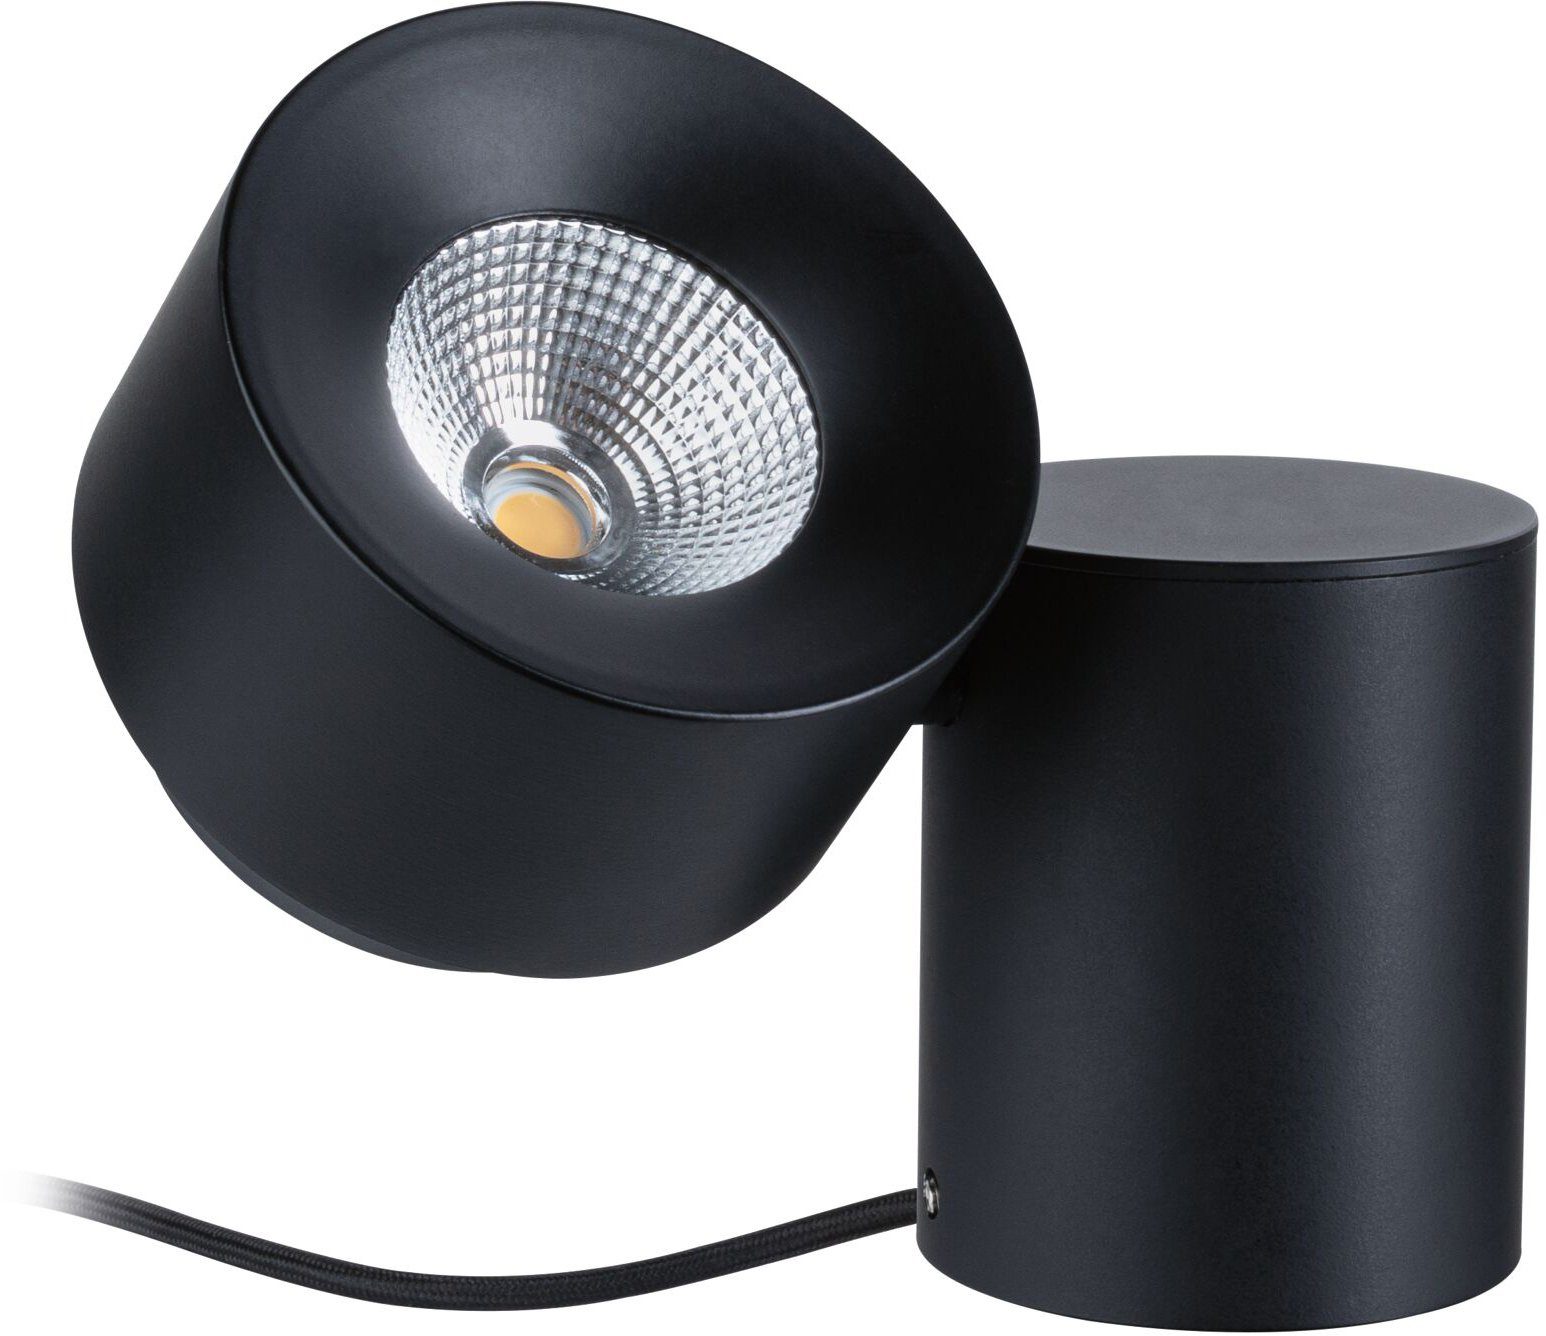 Paulmann Tischleuchte Puric LED LED, Schwarz/Grau, Metall integriert, fest Pane, Warmweiß, dimmbar